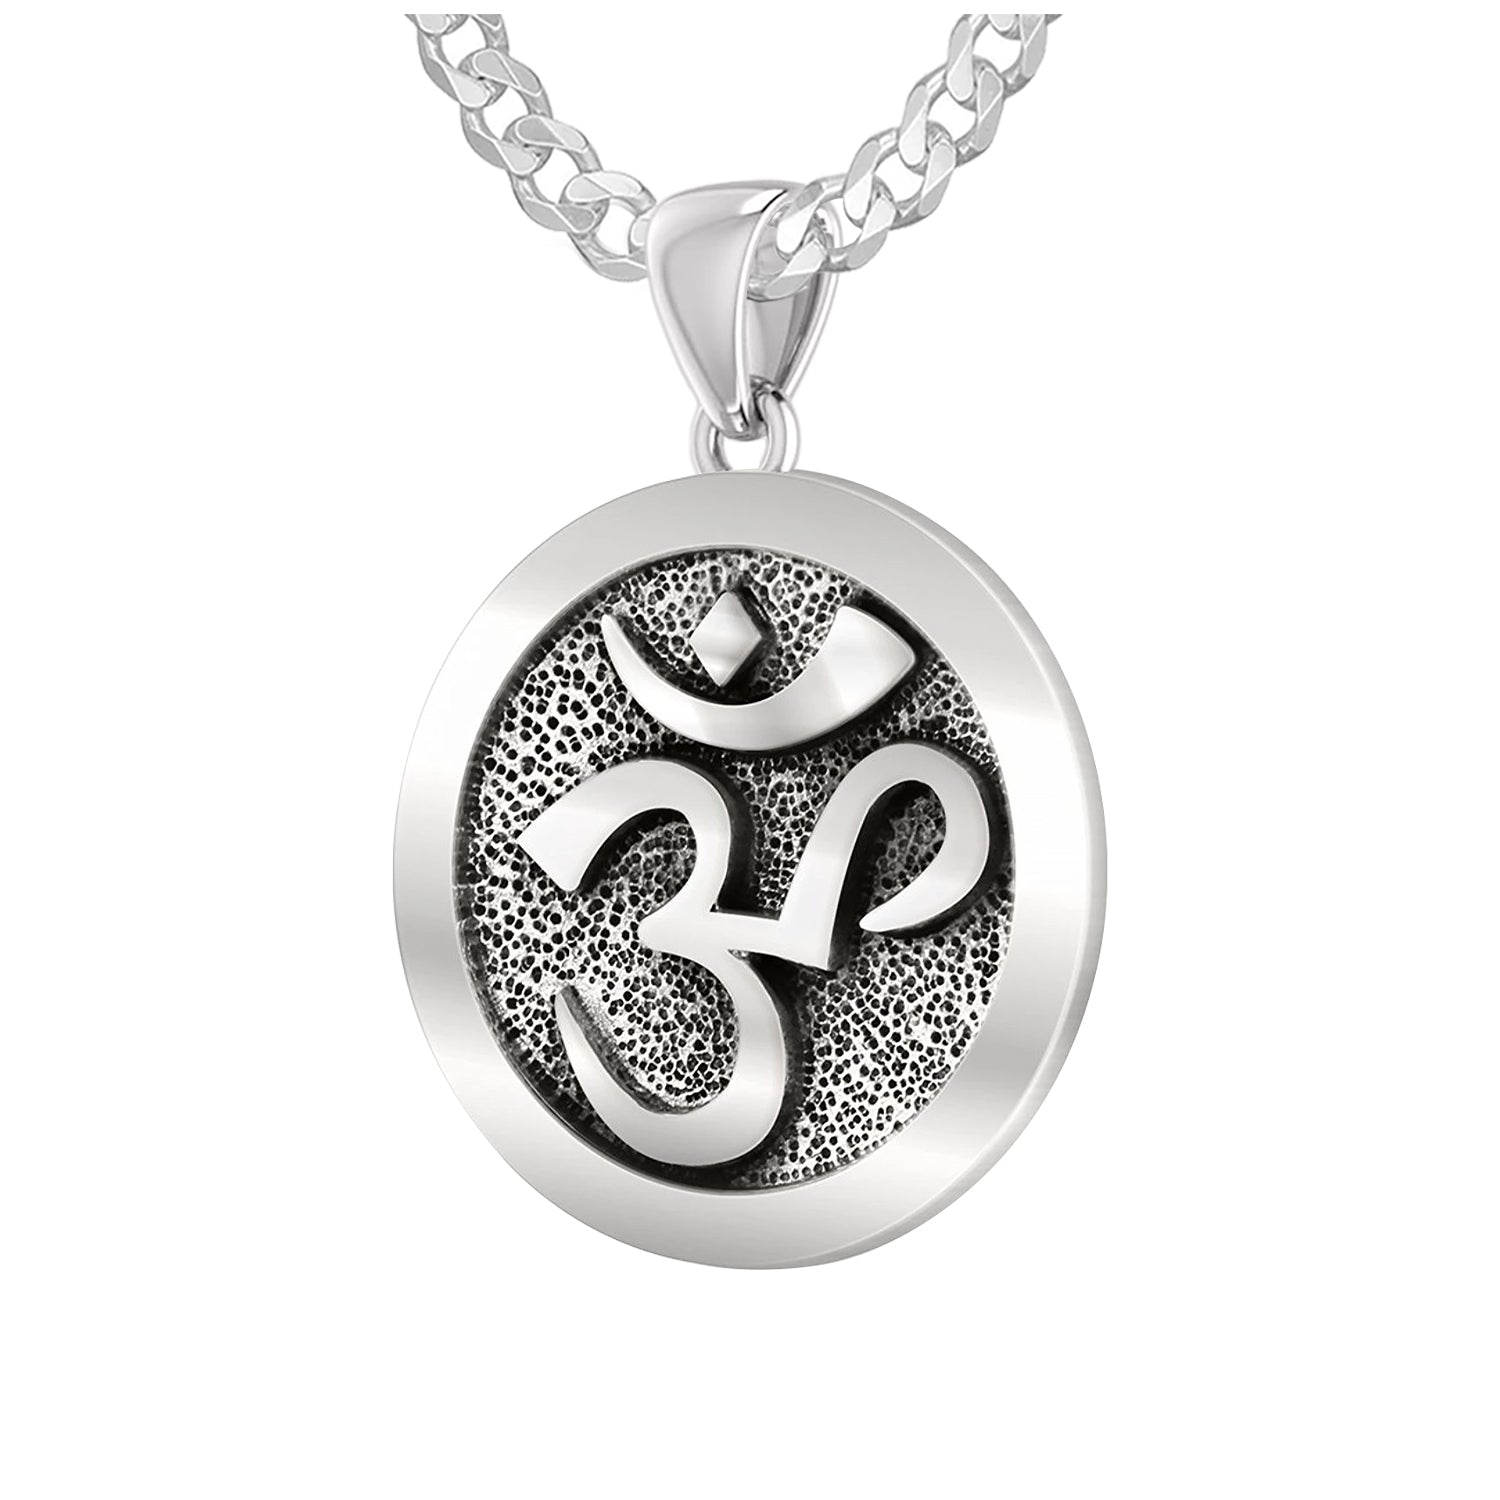 925 Sterling Silver Hindu Yoga Meditation Om Aum Symbol Pendant Necklace -  18in 2.3mm Curb Chain